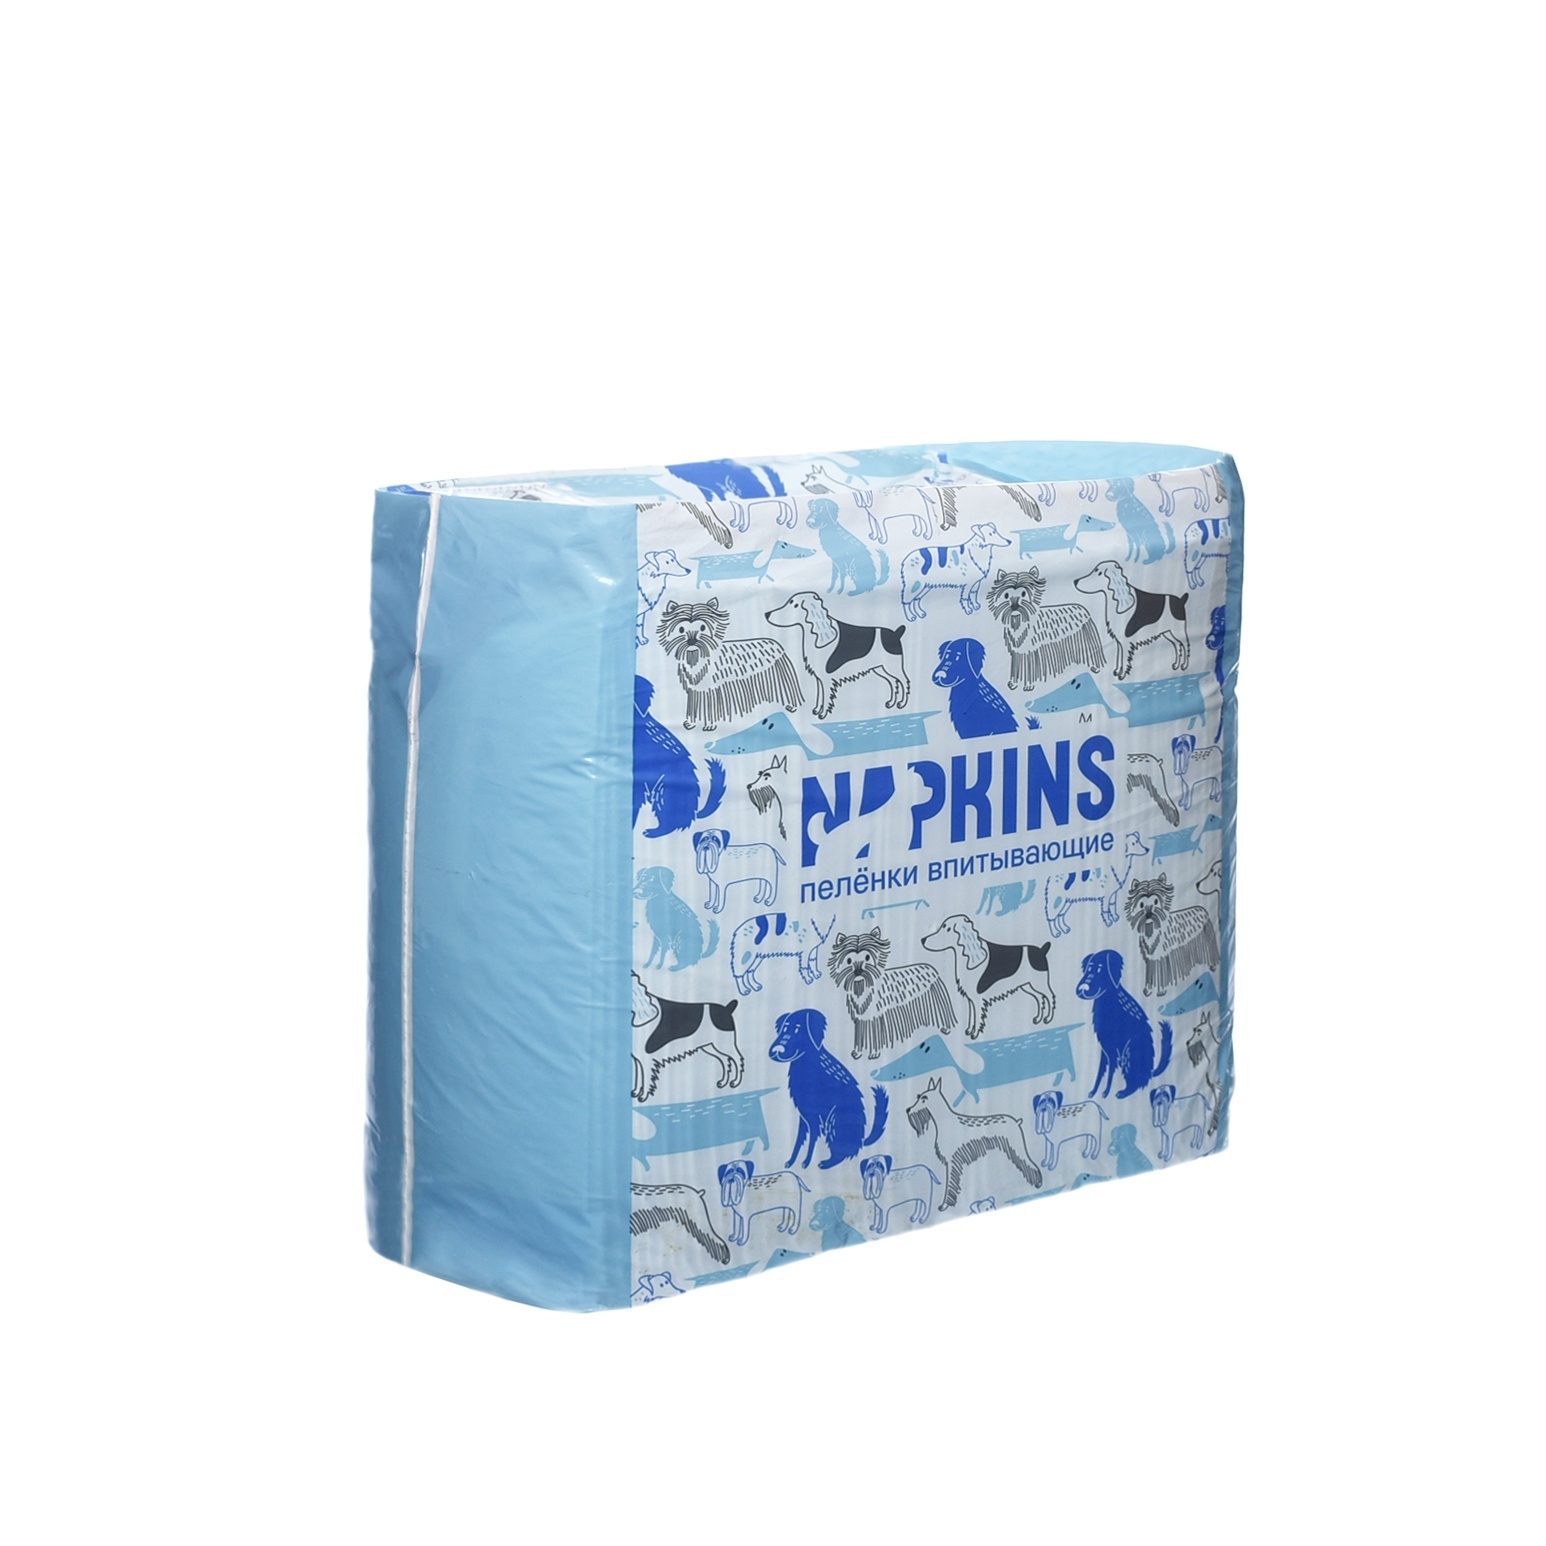 NAPKINS NAPKINS гелевые пелёнки для собак 60х40 (300 г) napkins napkins гелевые пелёнки для собак 60х40 300 г